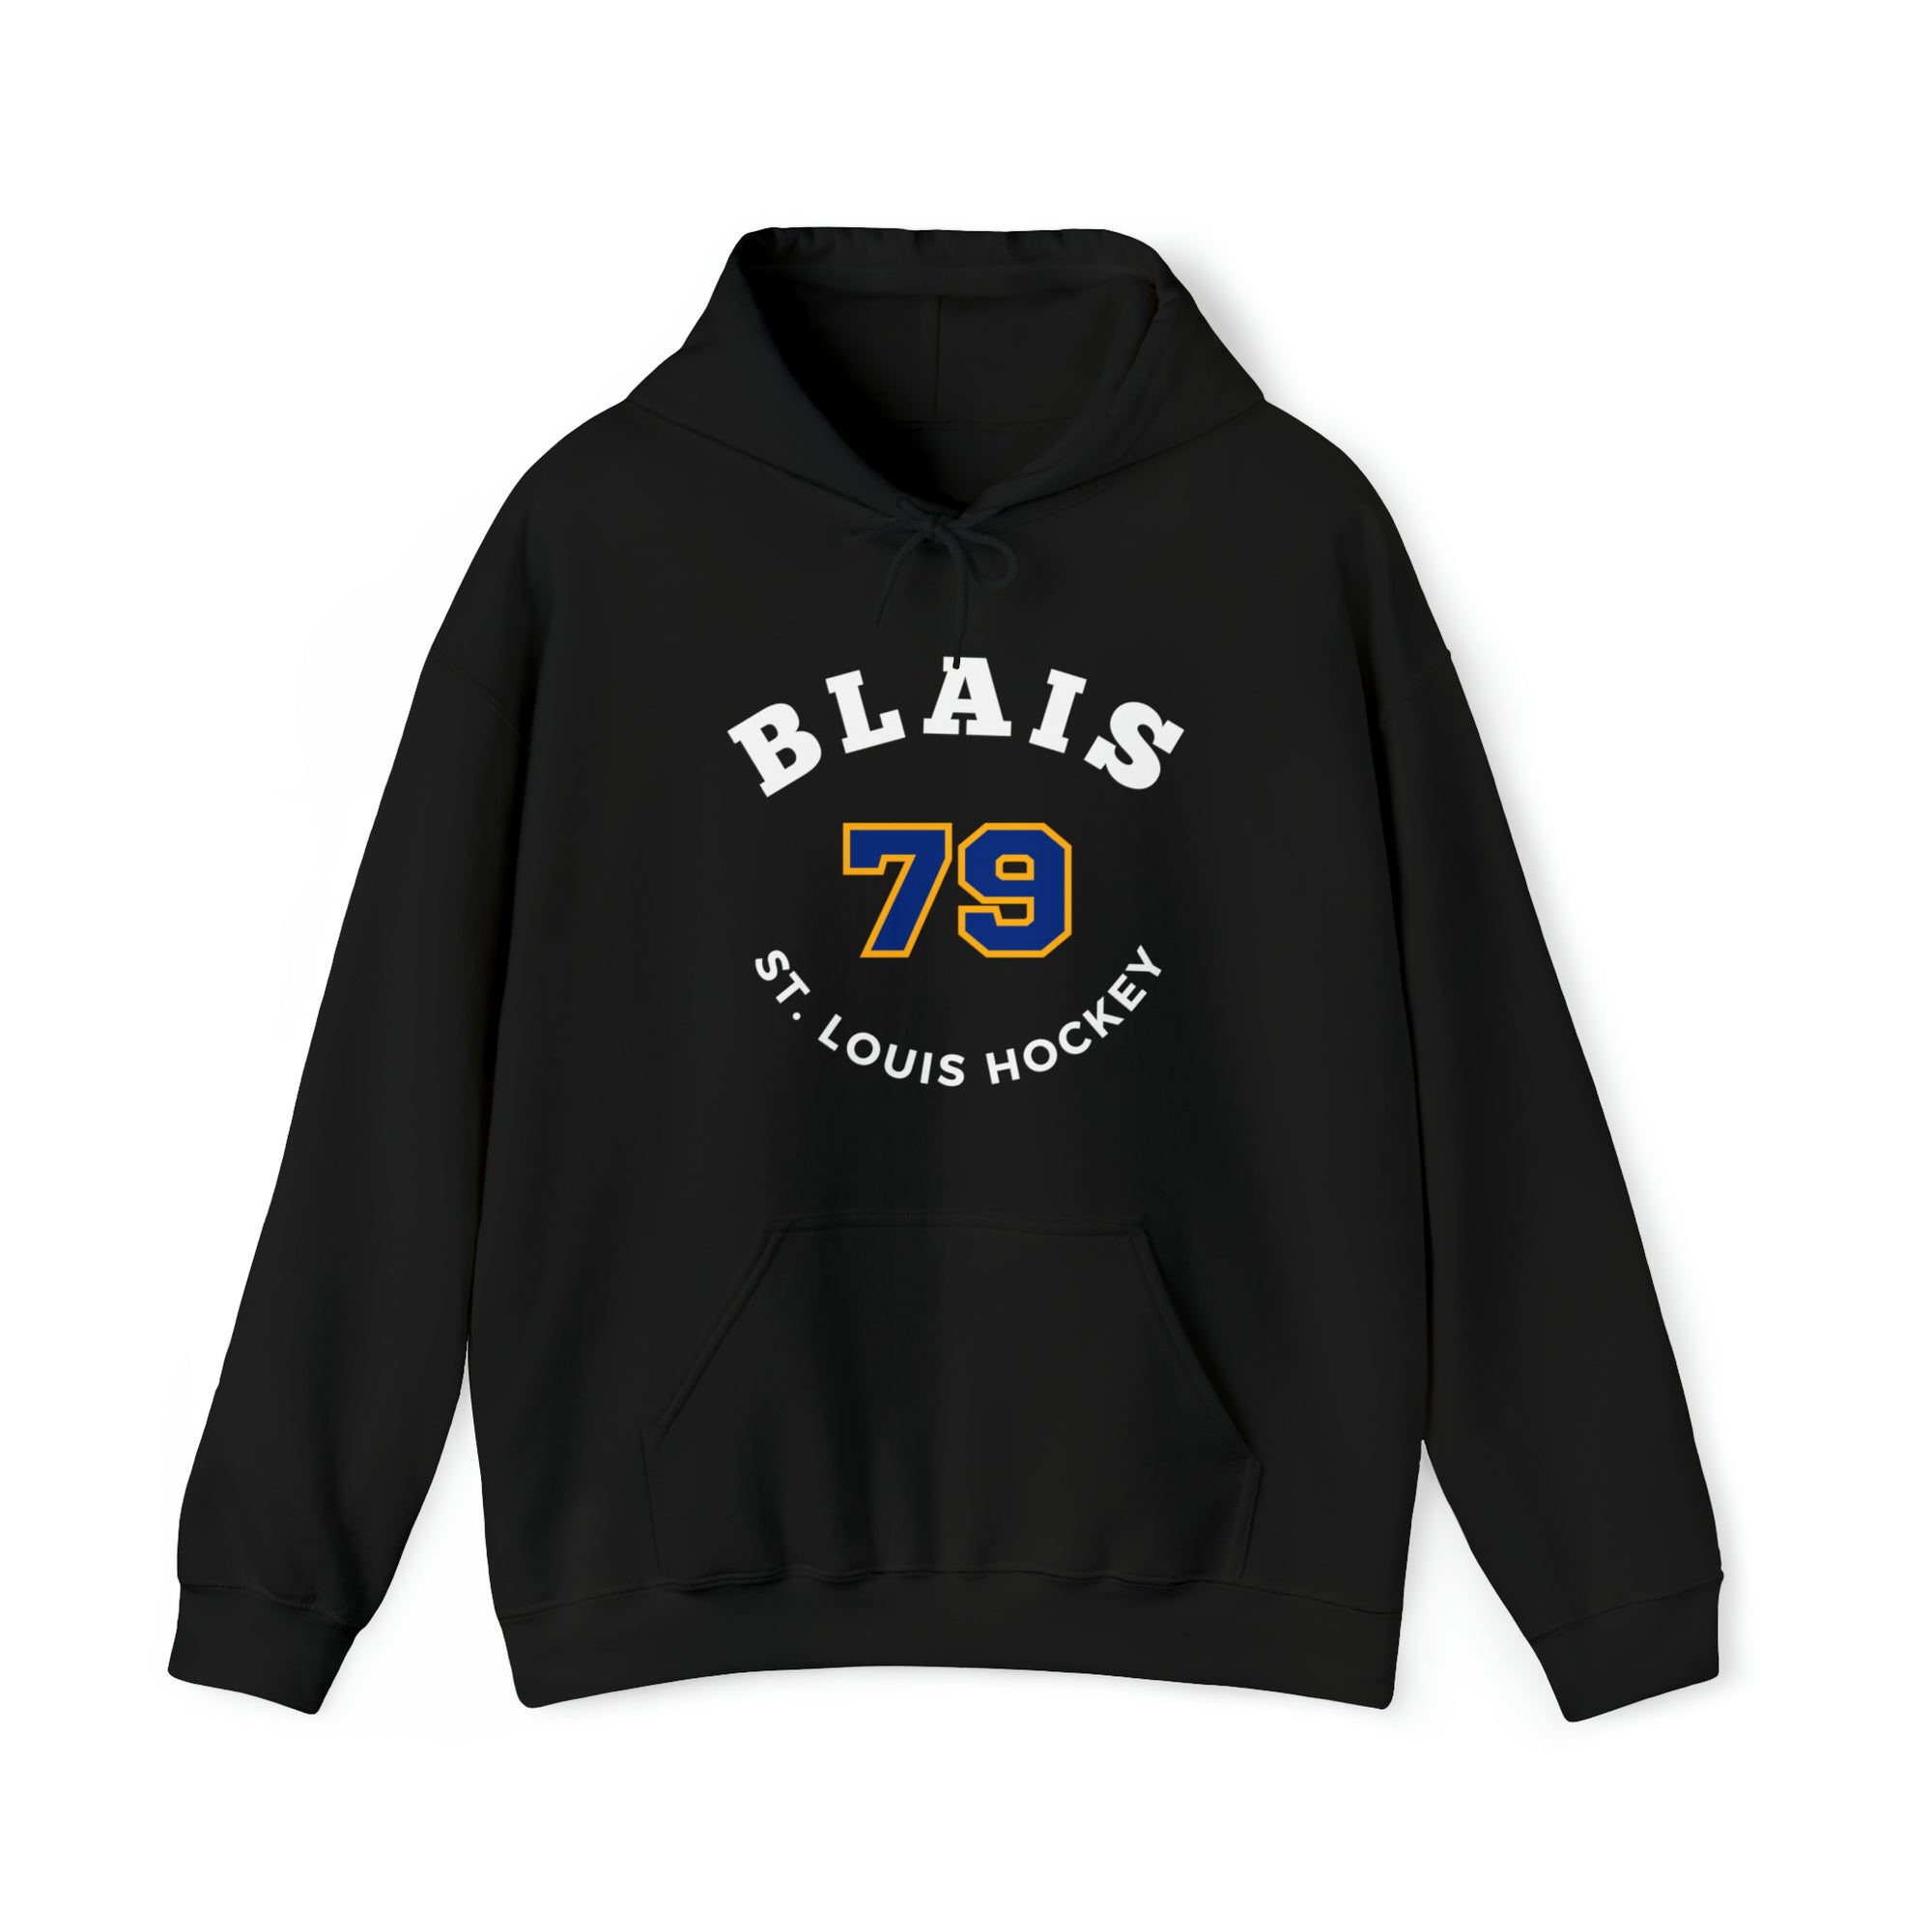 Blais 79 St. Louis Hockey Number Arch Design Unisex Hooded Sweatshirt